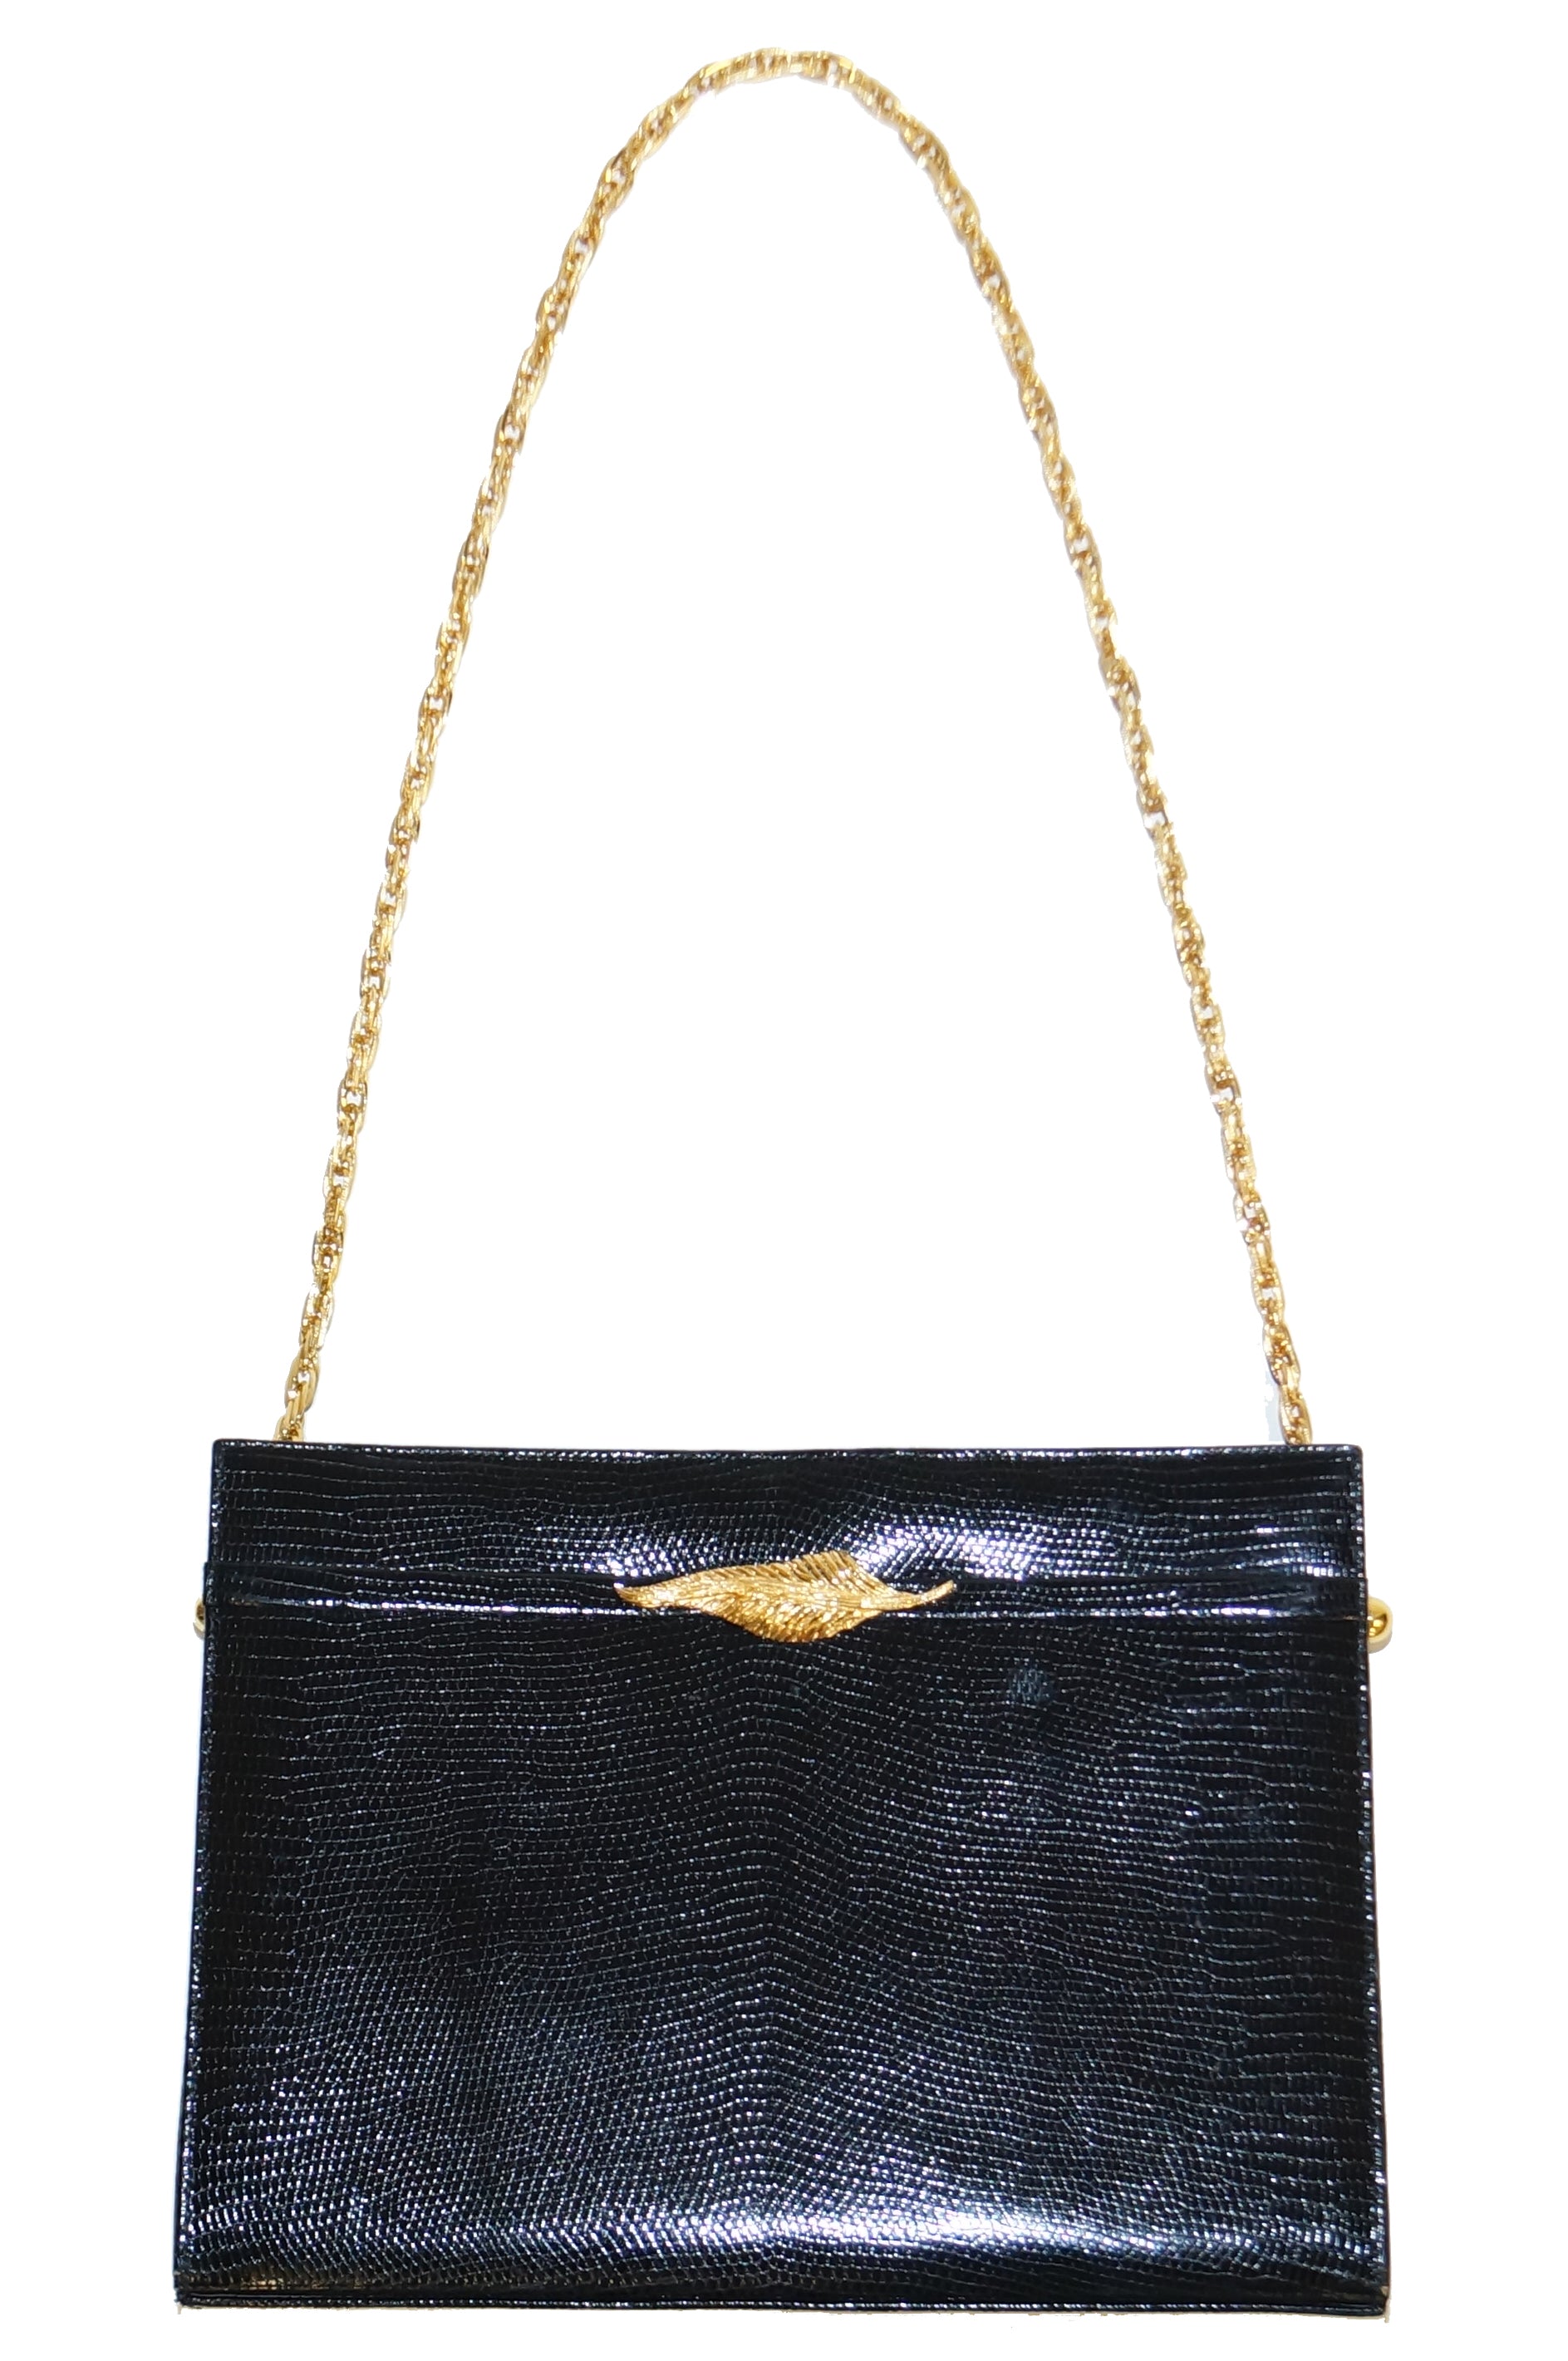 Fendi Woven Leather Bag, 1960s 1970s